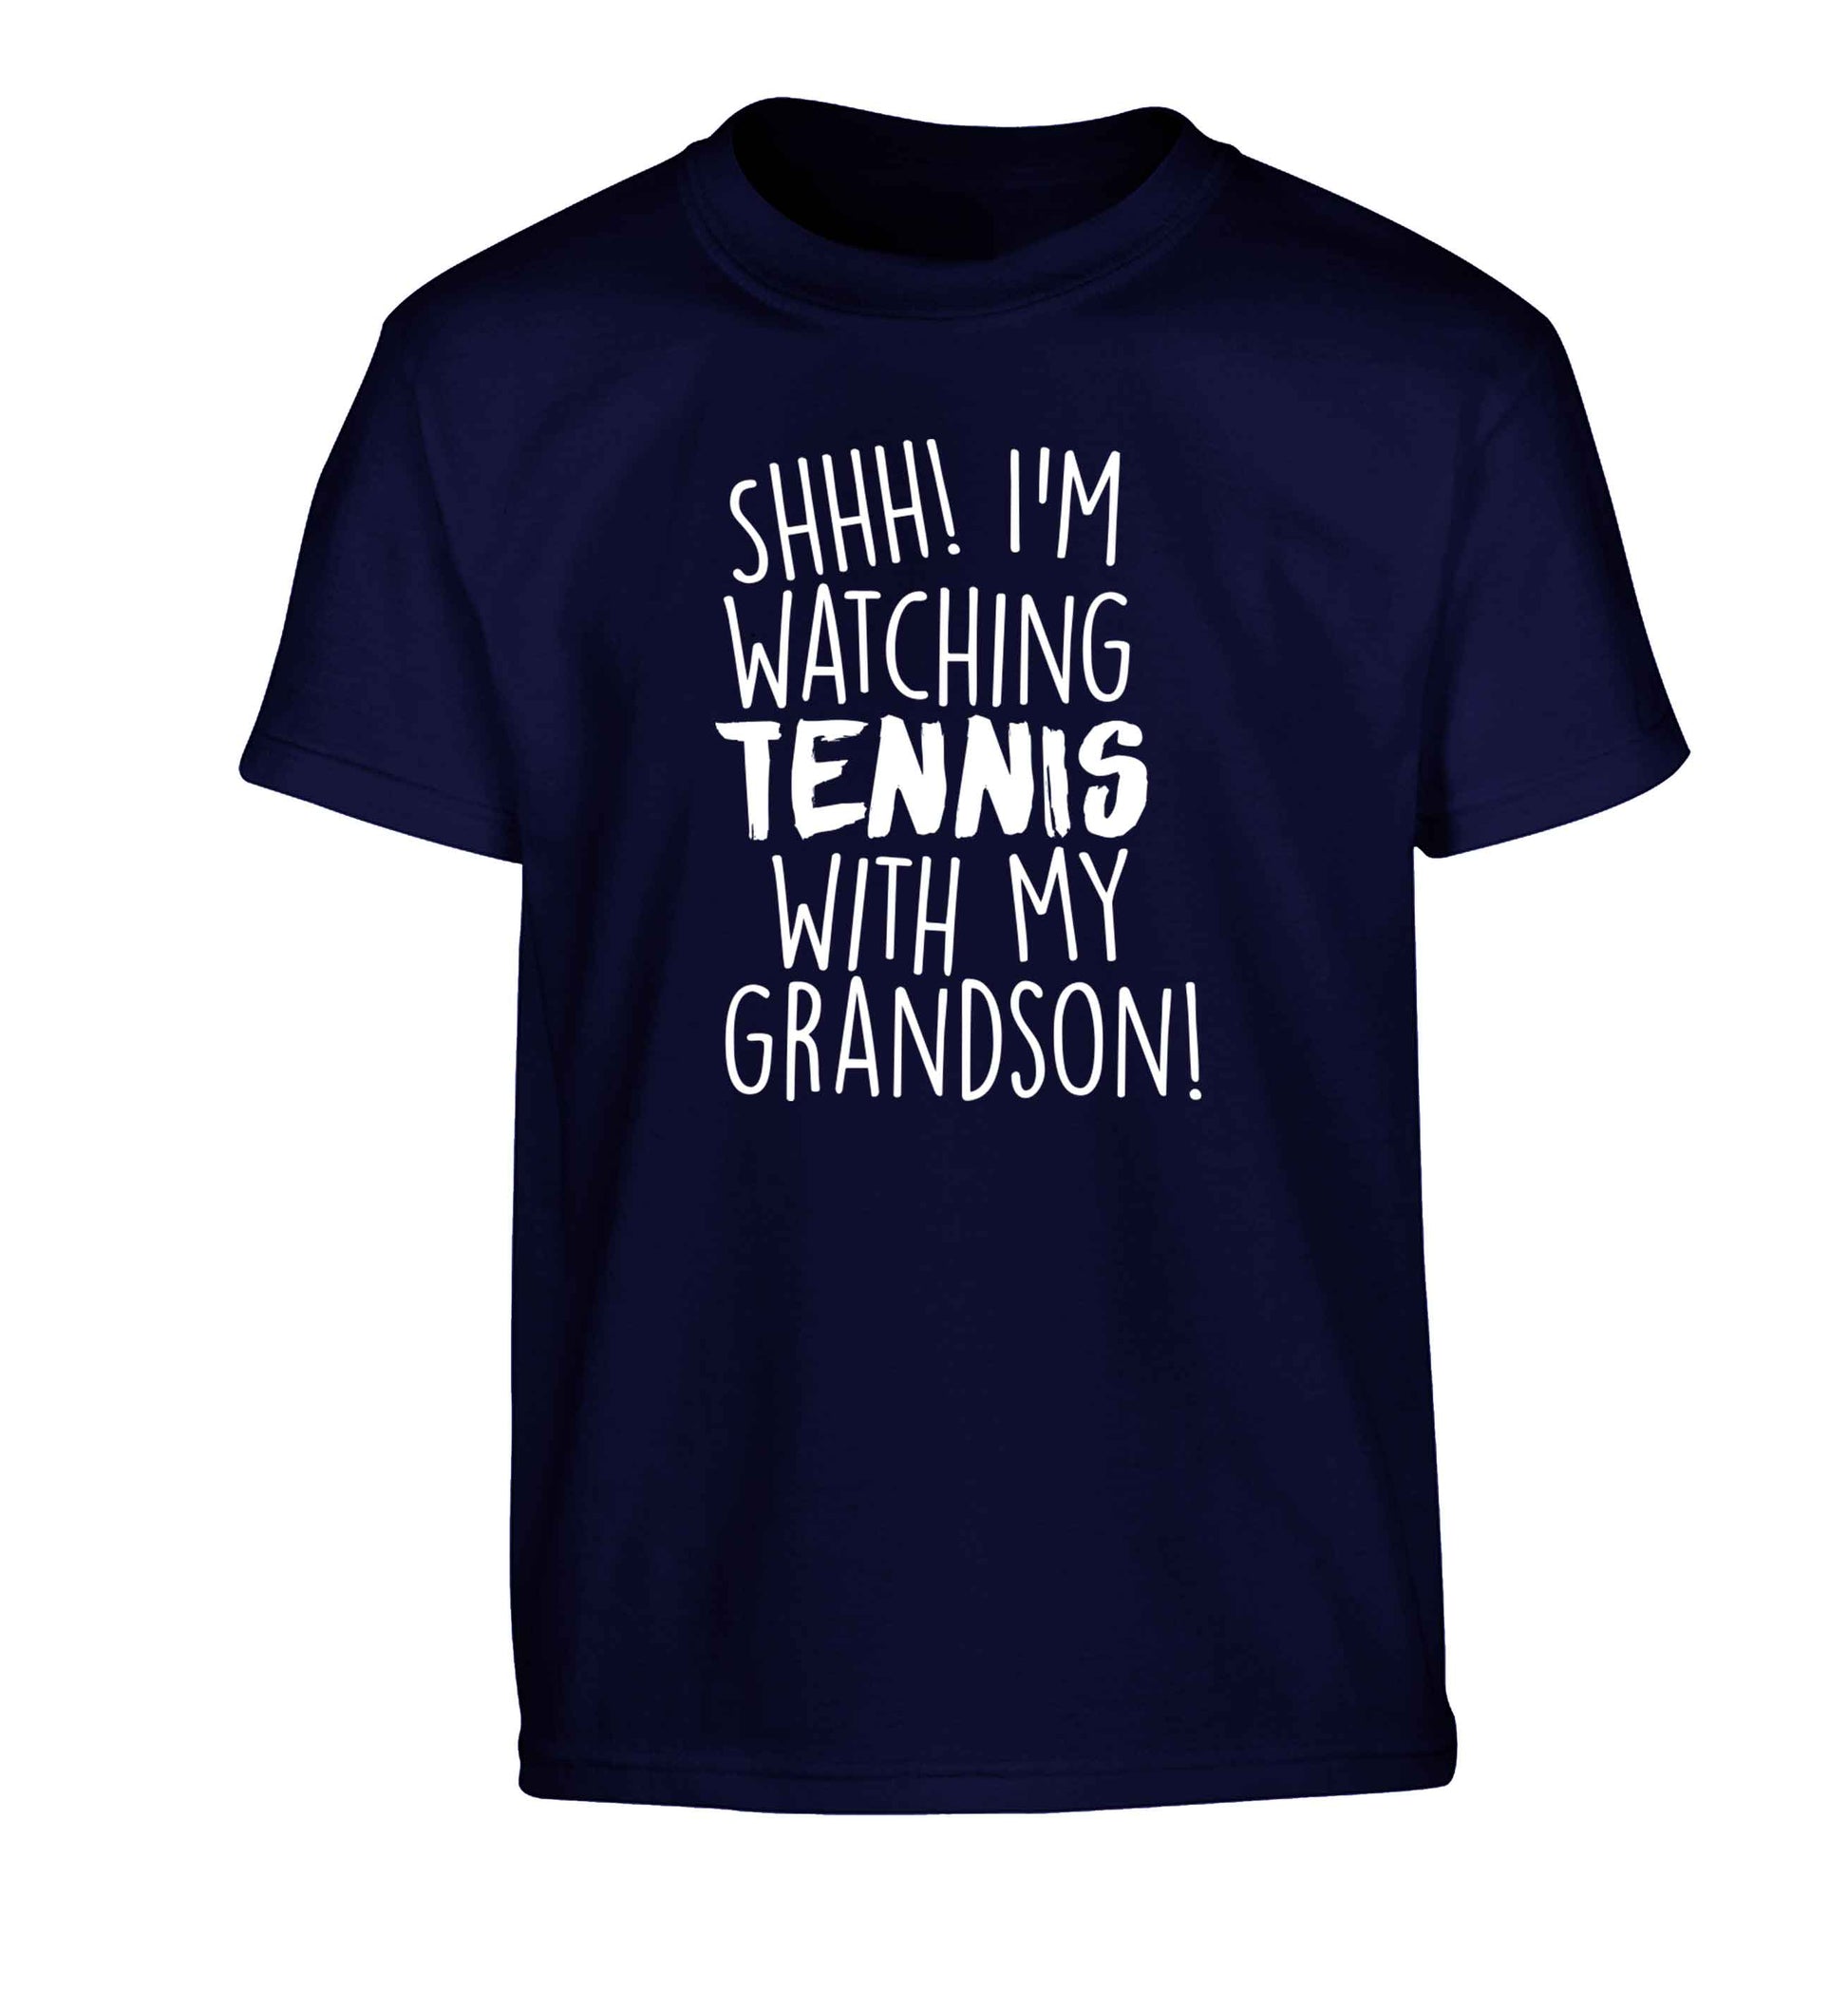 Shh! I'm watching tennis with my grandson! Children's navy Tshirt 12-13 Years